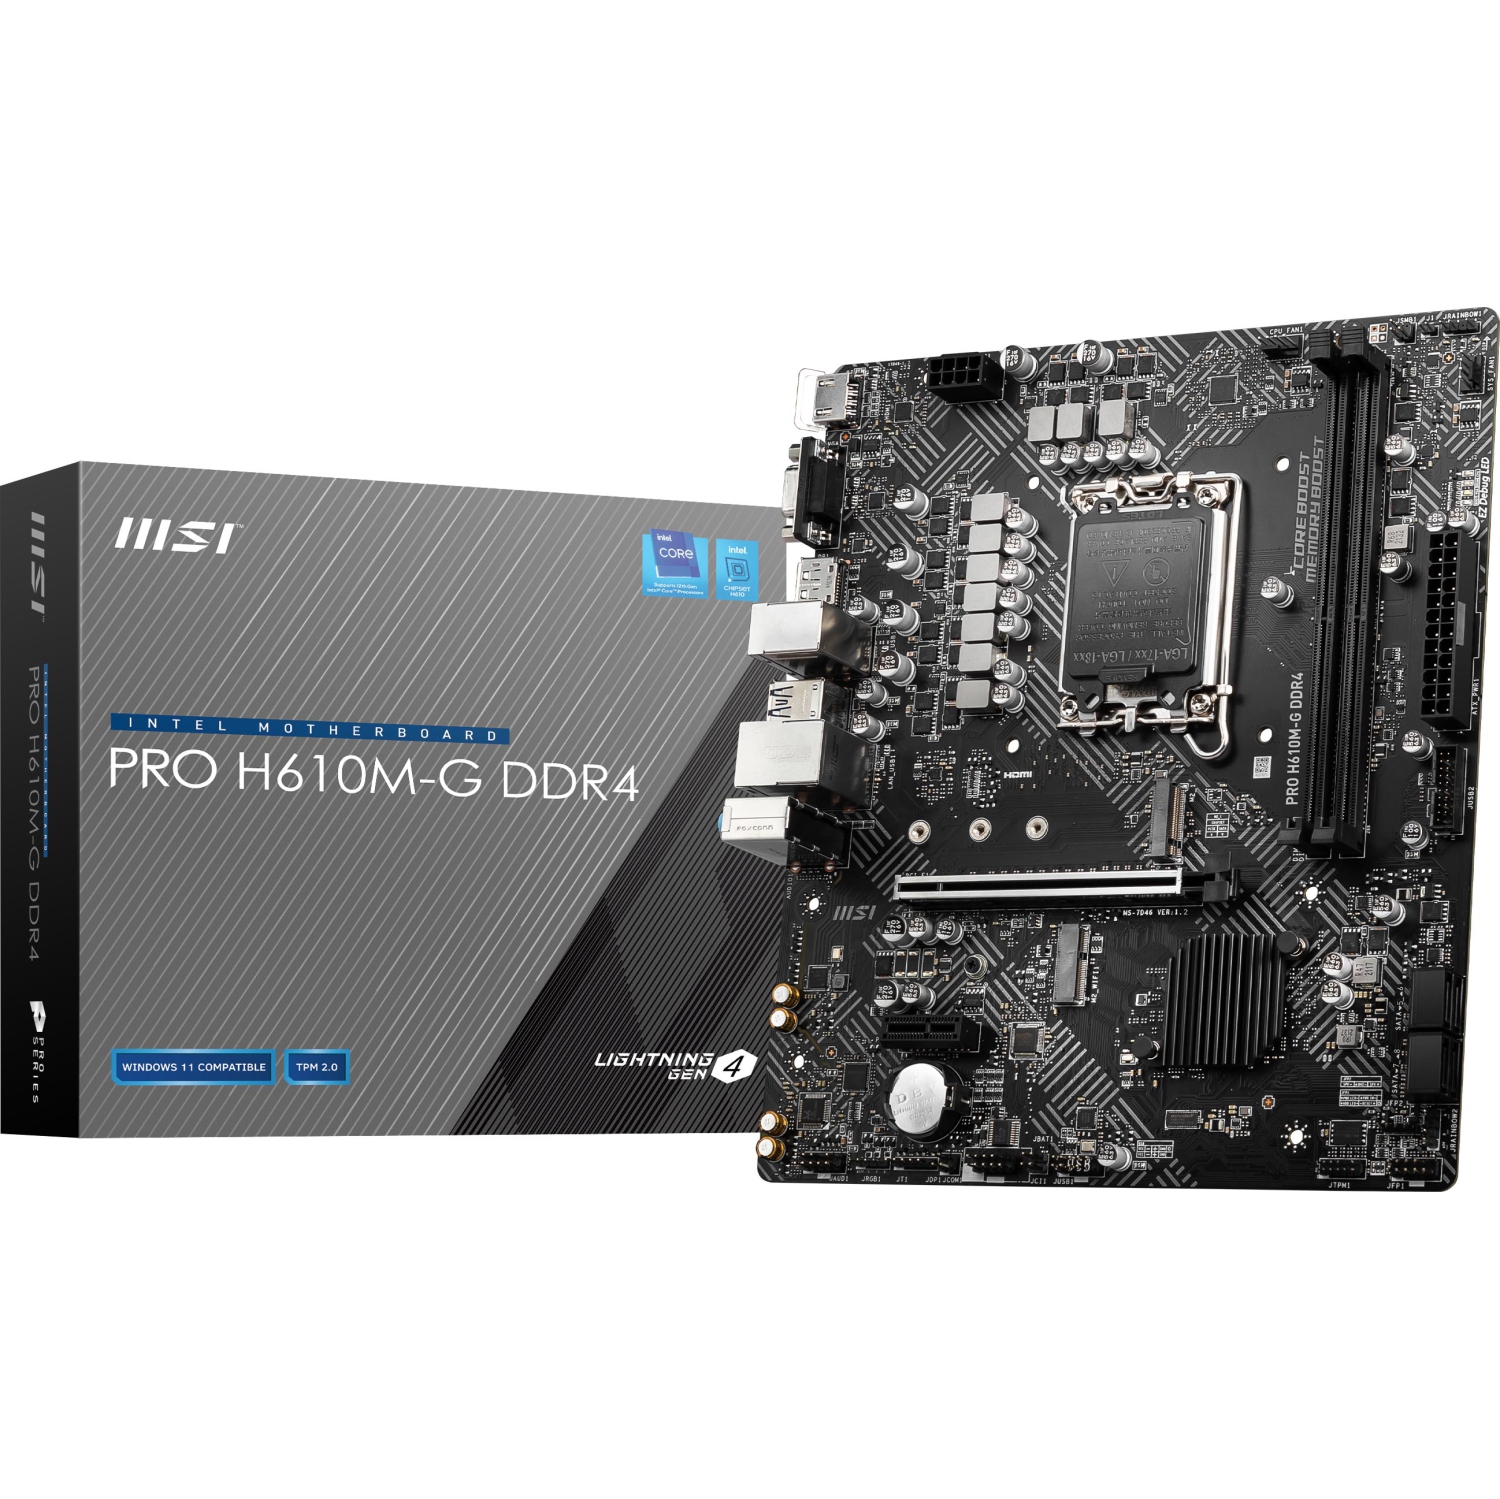 MSI PRO H610M-G DDR4 Motherboard (Supports 12th Gen Intel® Core™ CPU, LGA 1700 Socket, DDR4, PCIe 4, 2.5G LAN, M.2 Slots, USB 3.2, mATX)